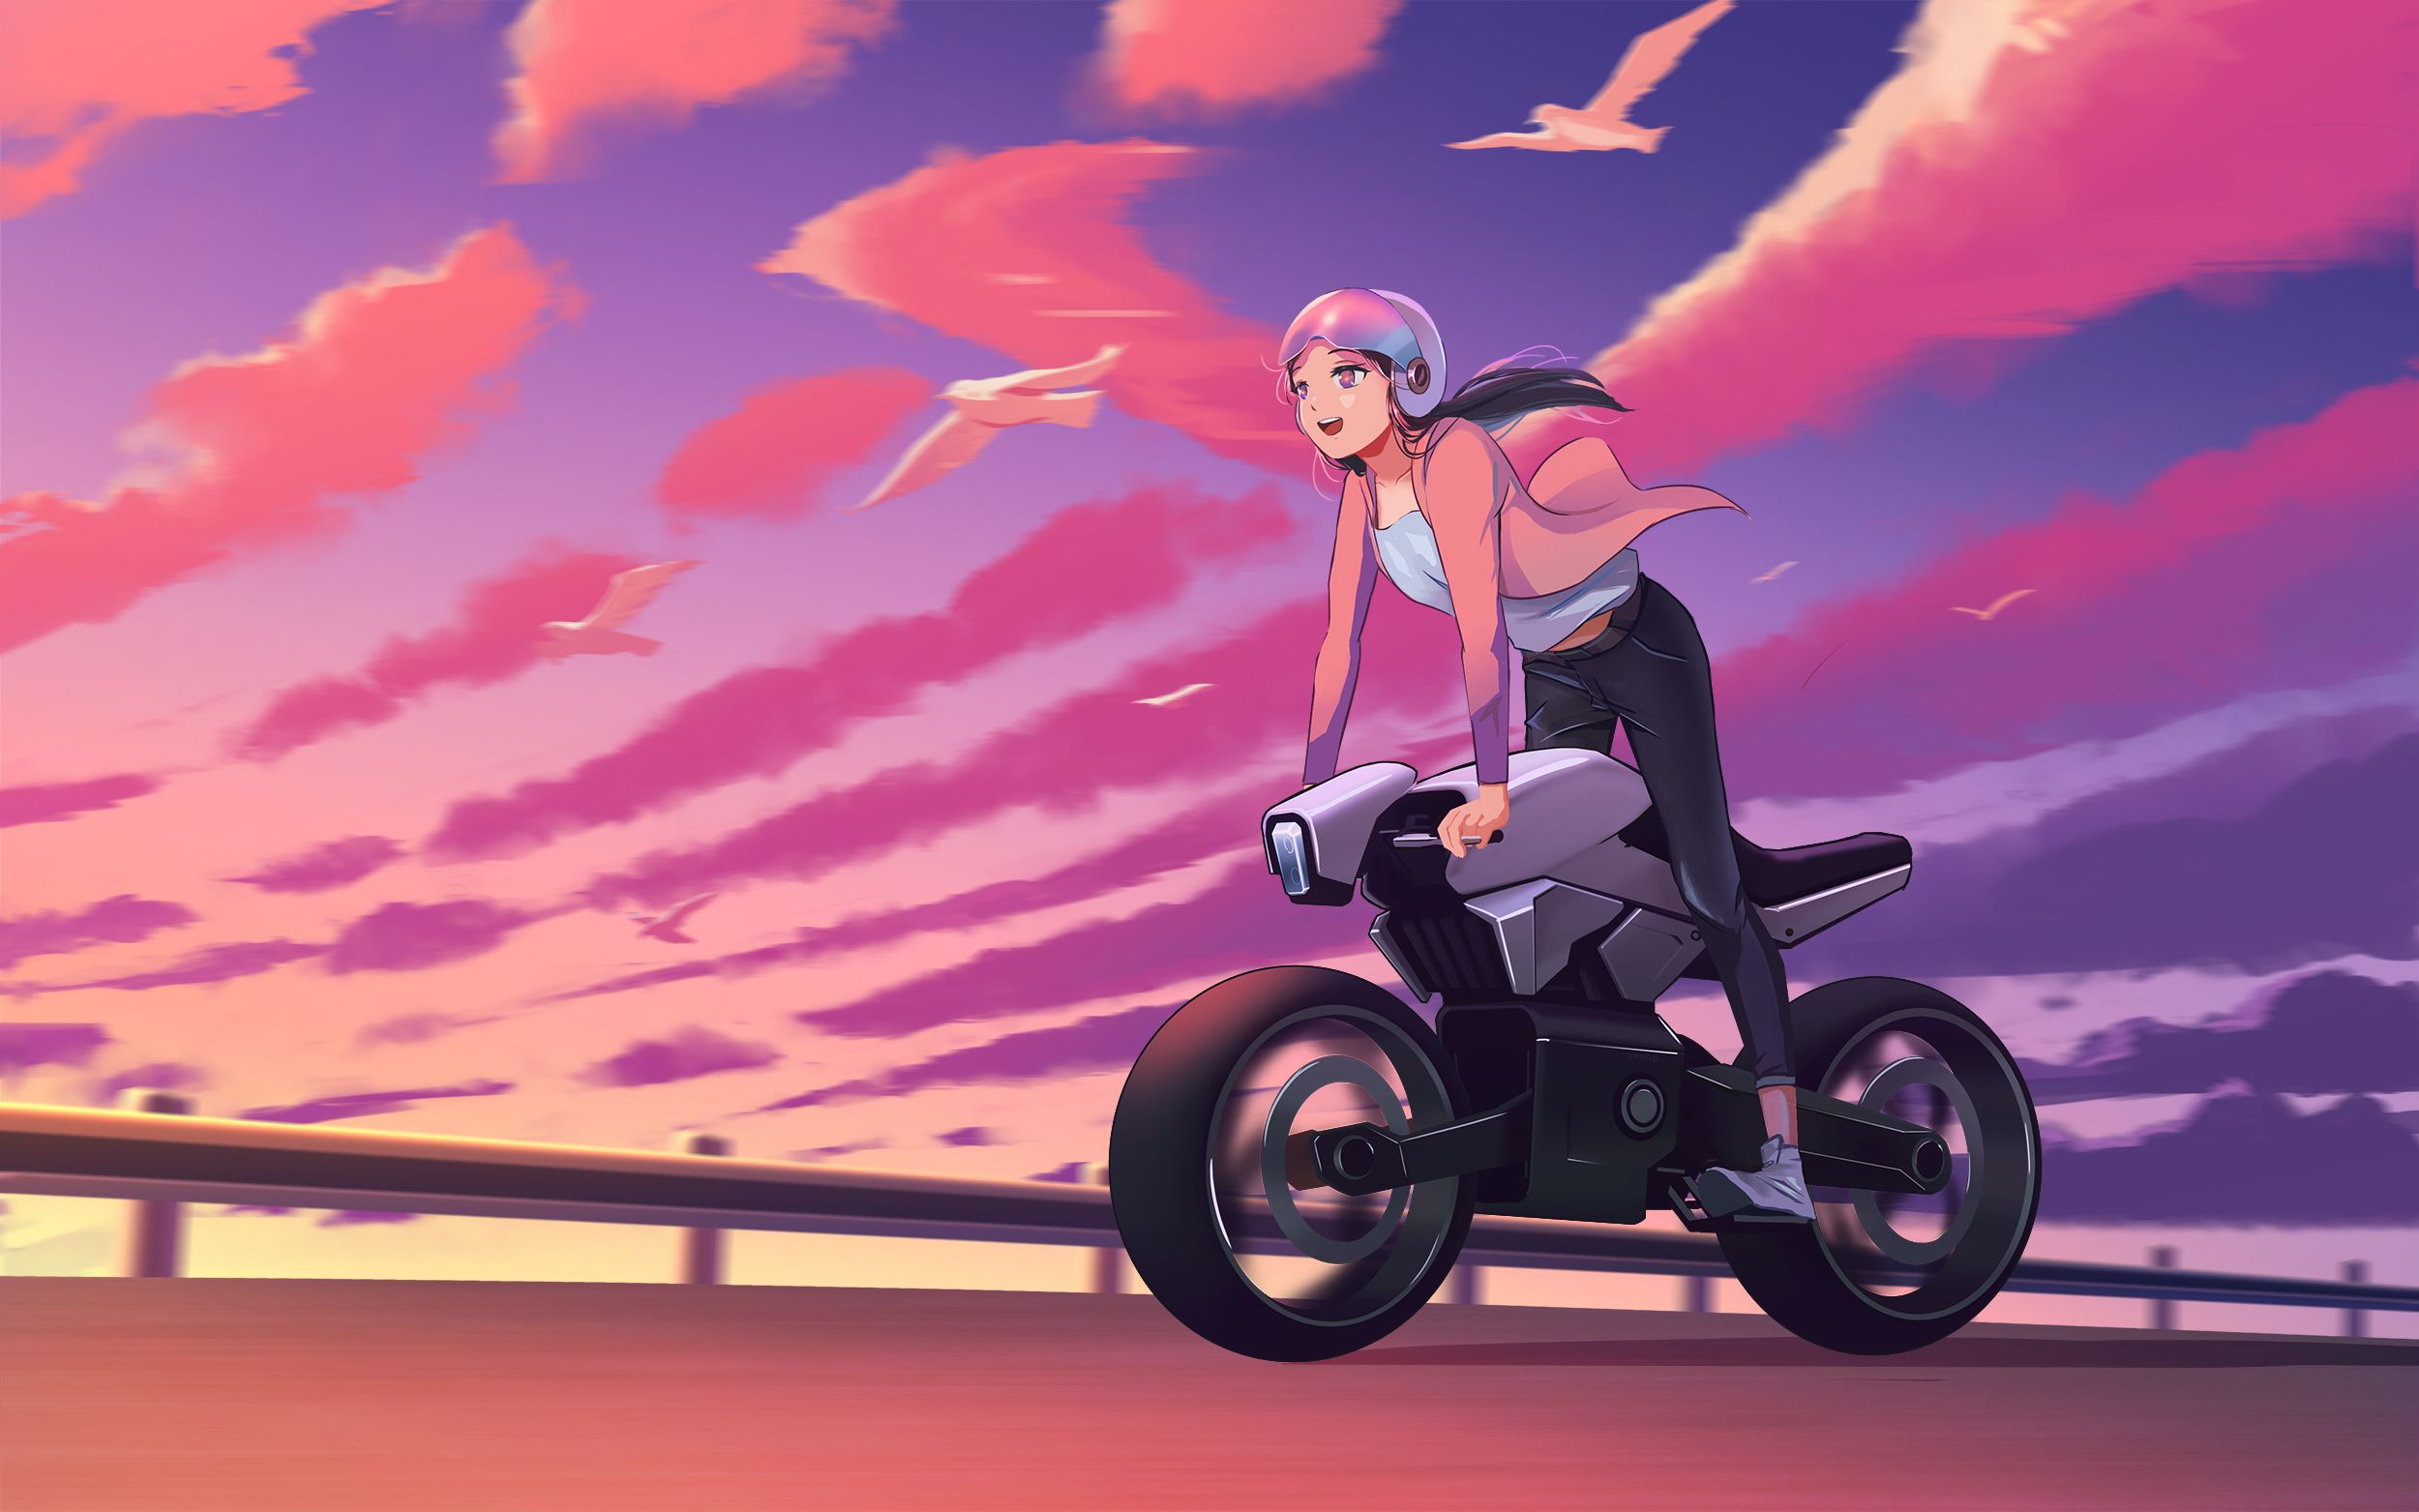  Motorrad Girl Hintergrundbild 2500x1563. Anime Biker Girl Art, HD Anime, 4k Wallpaper, Image, Background, Photo and Picture